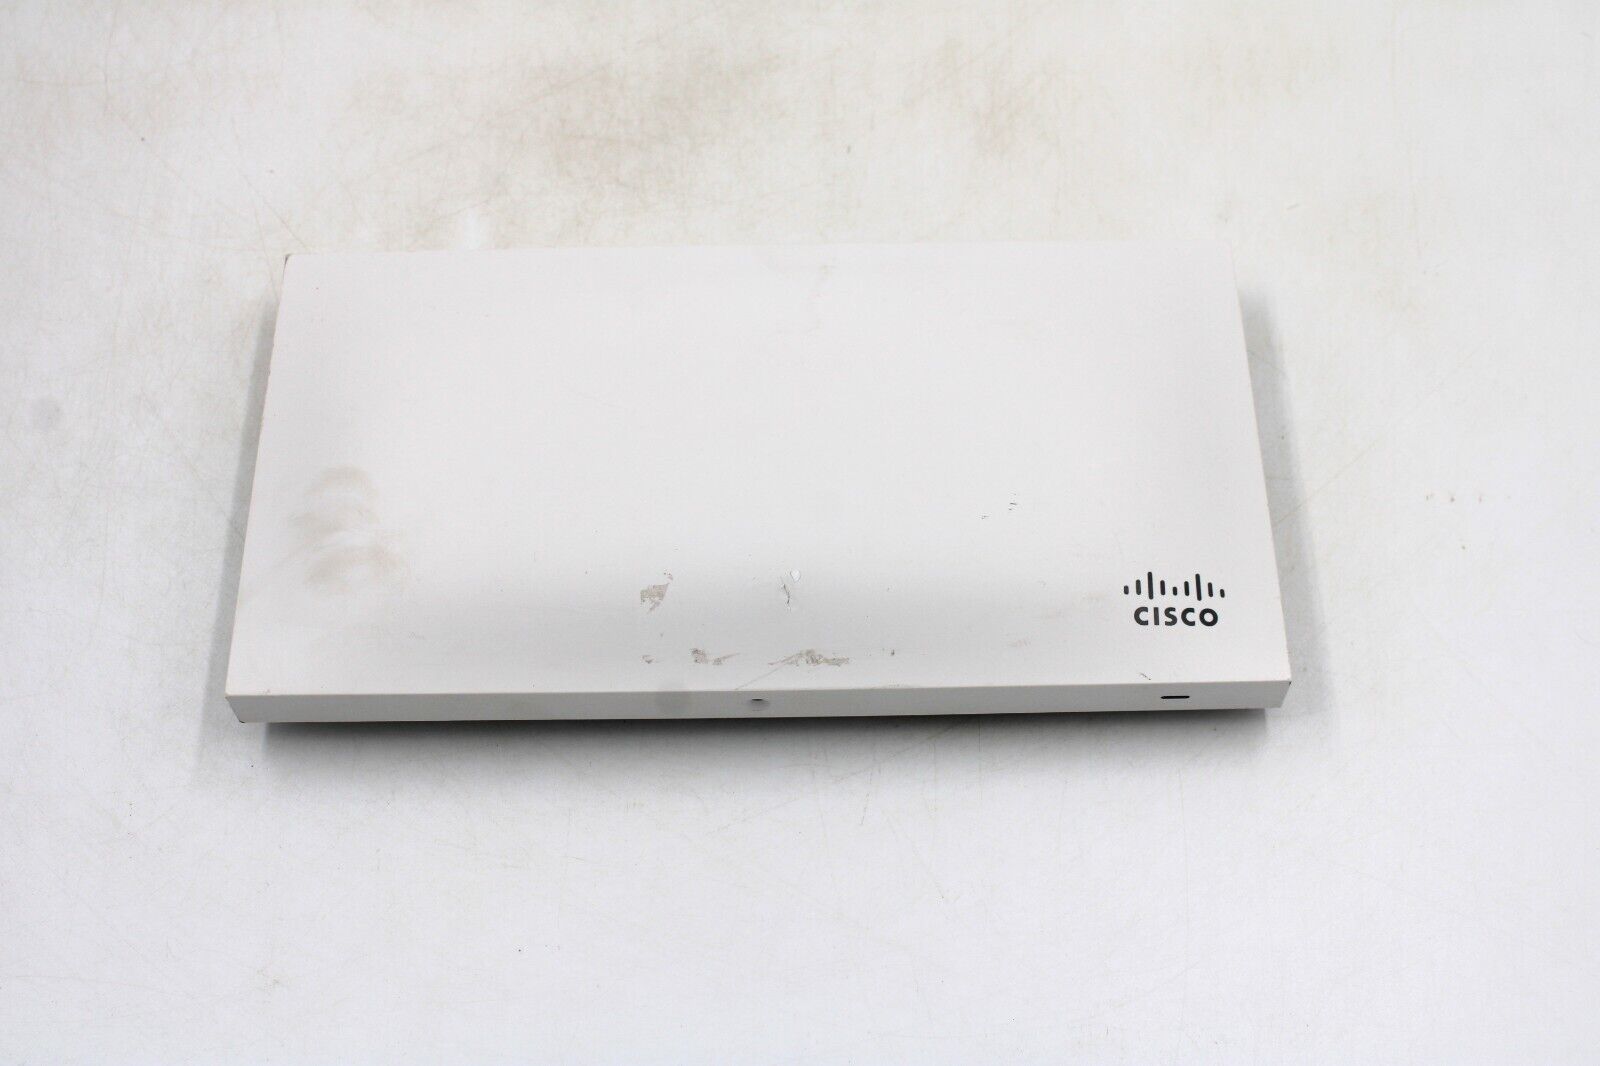 Cisco Meraki MR33-HW Dual-Band Cloud Managed Wireless Access Point Unclaimed